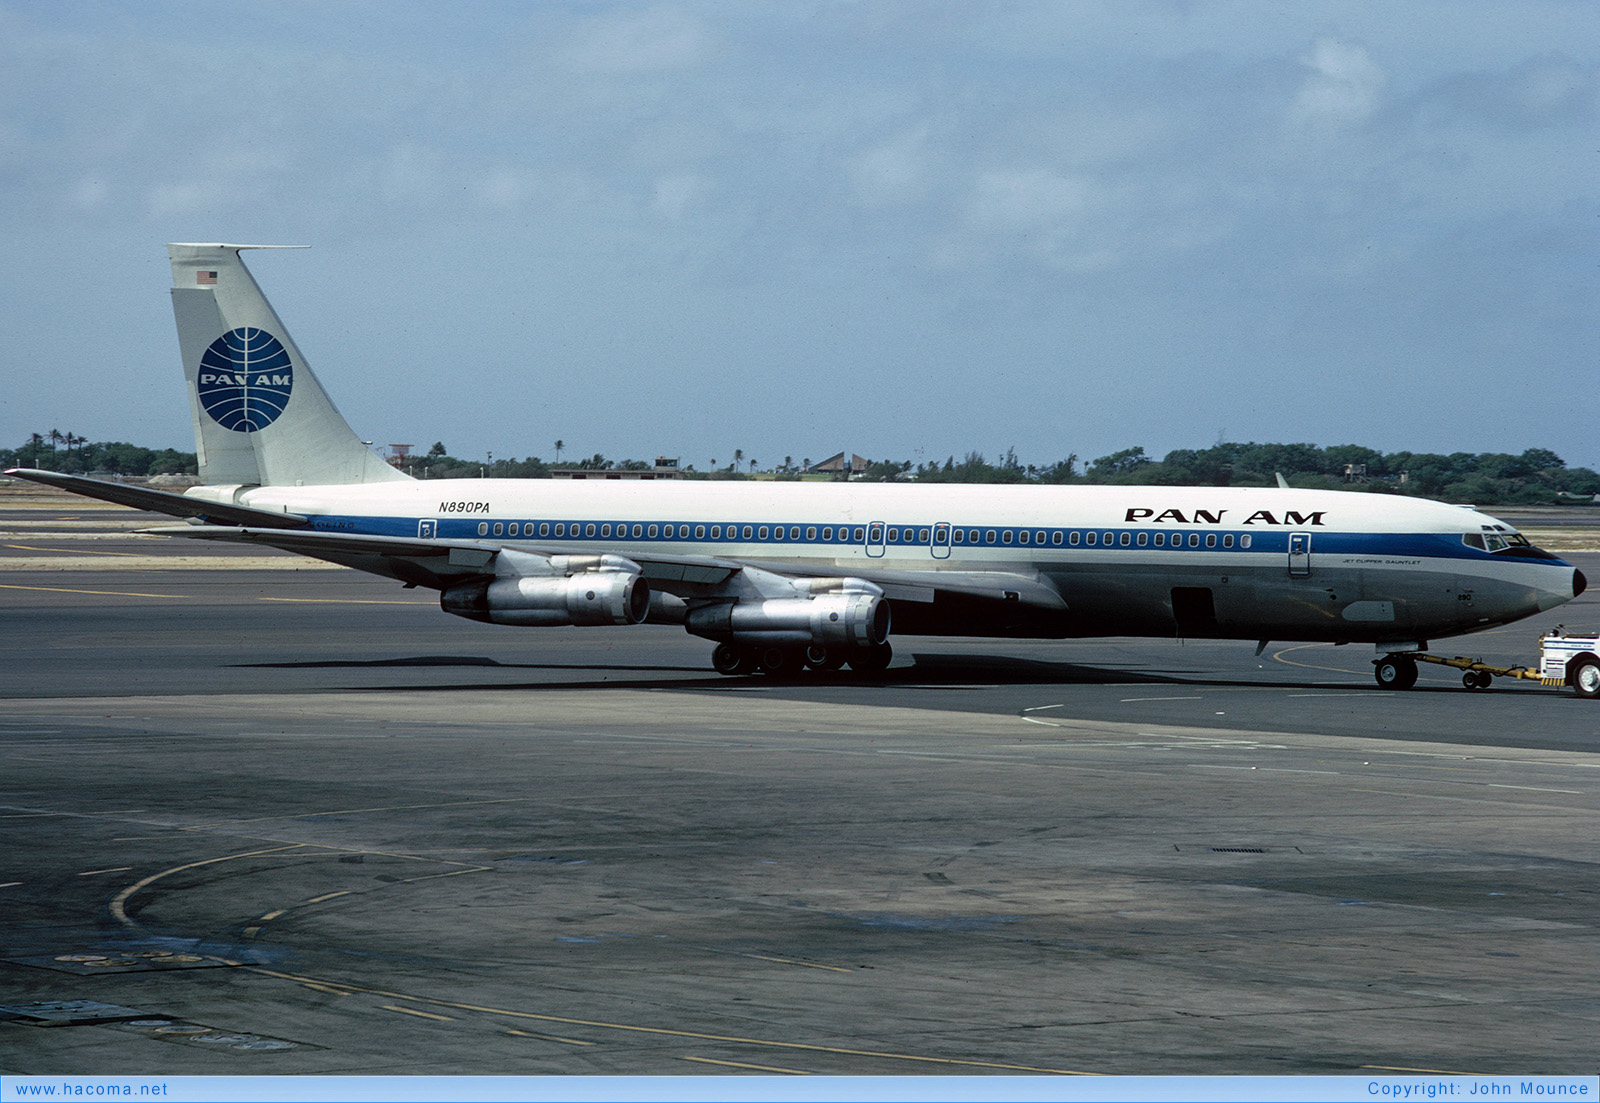 Photo of N890PA - Pan Am Clipper Gauntlet - Honolulu International Airport - Dec 9, 1971